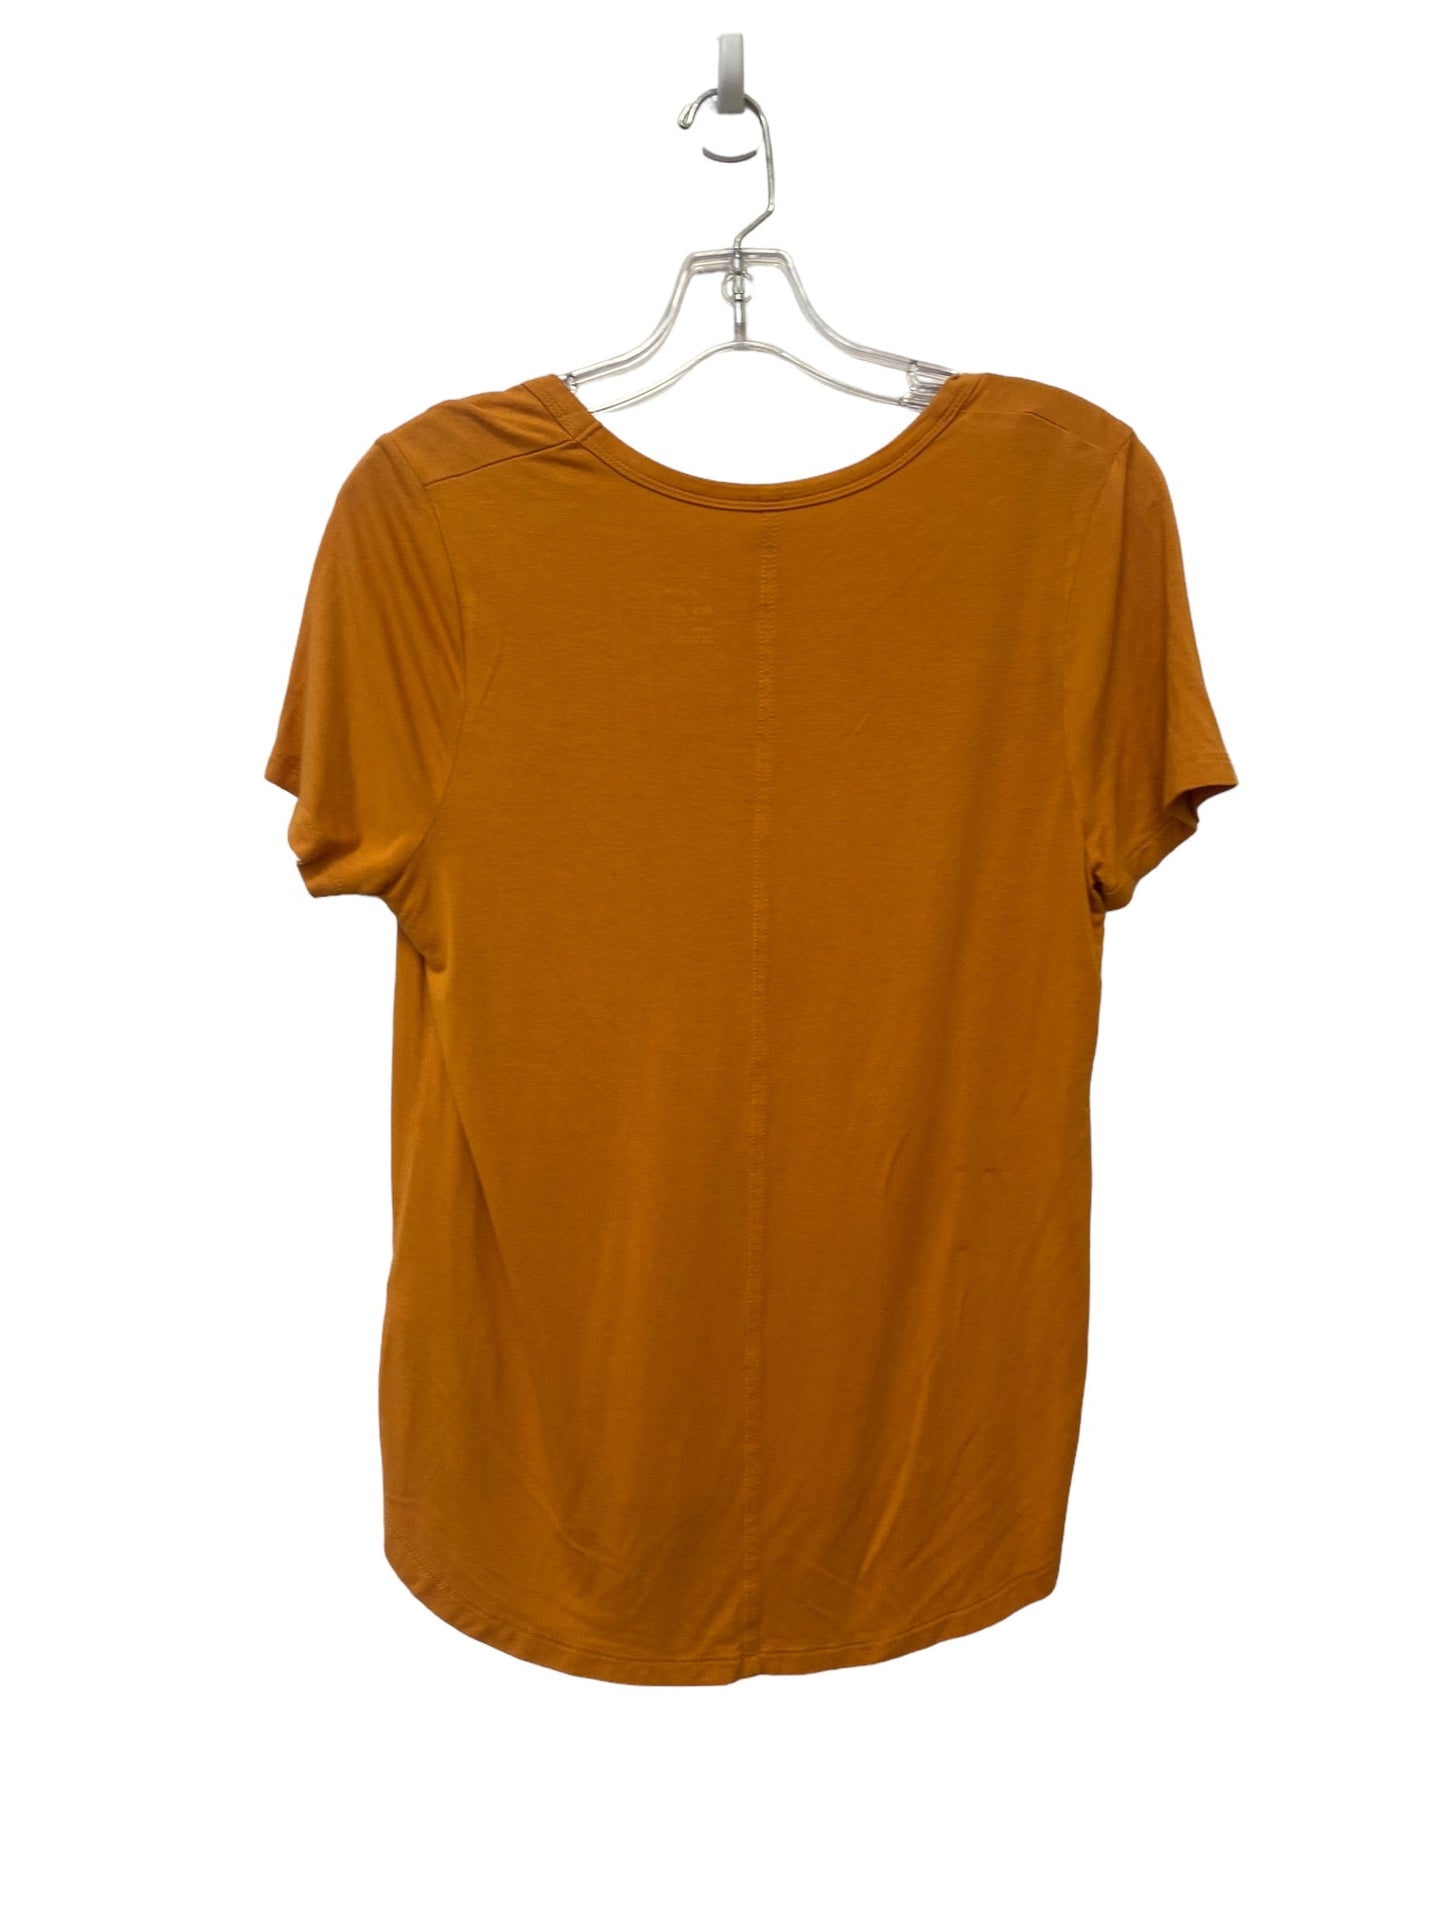 Orange Top Short Sleeve Basic A New Day, Size S